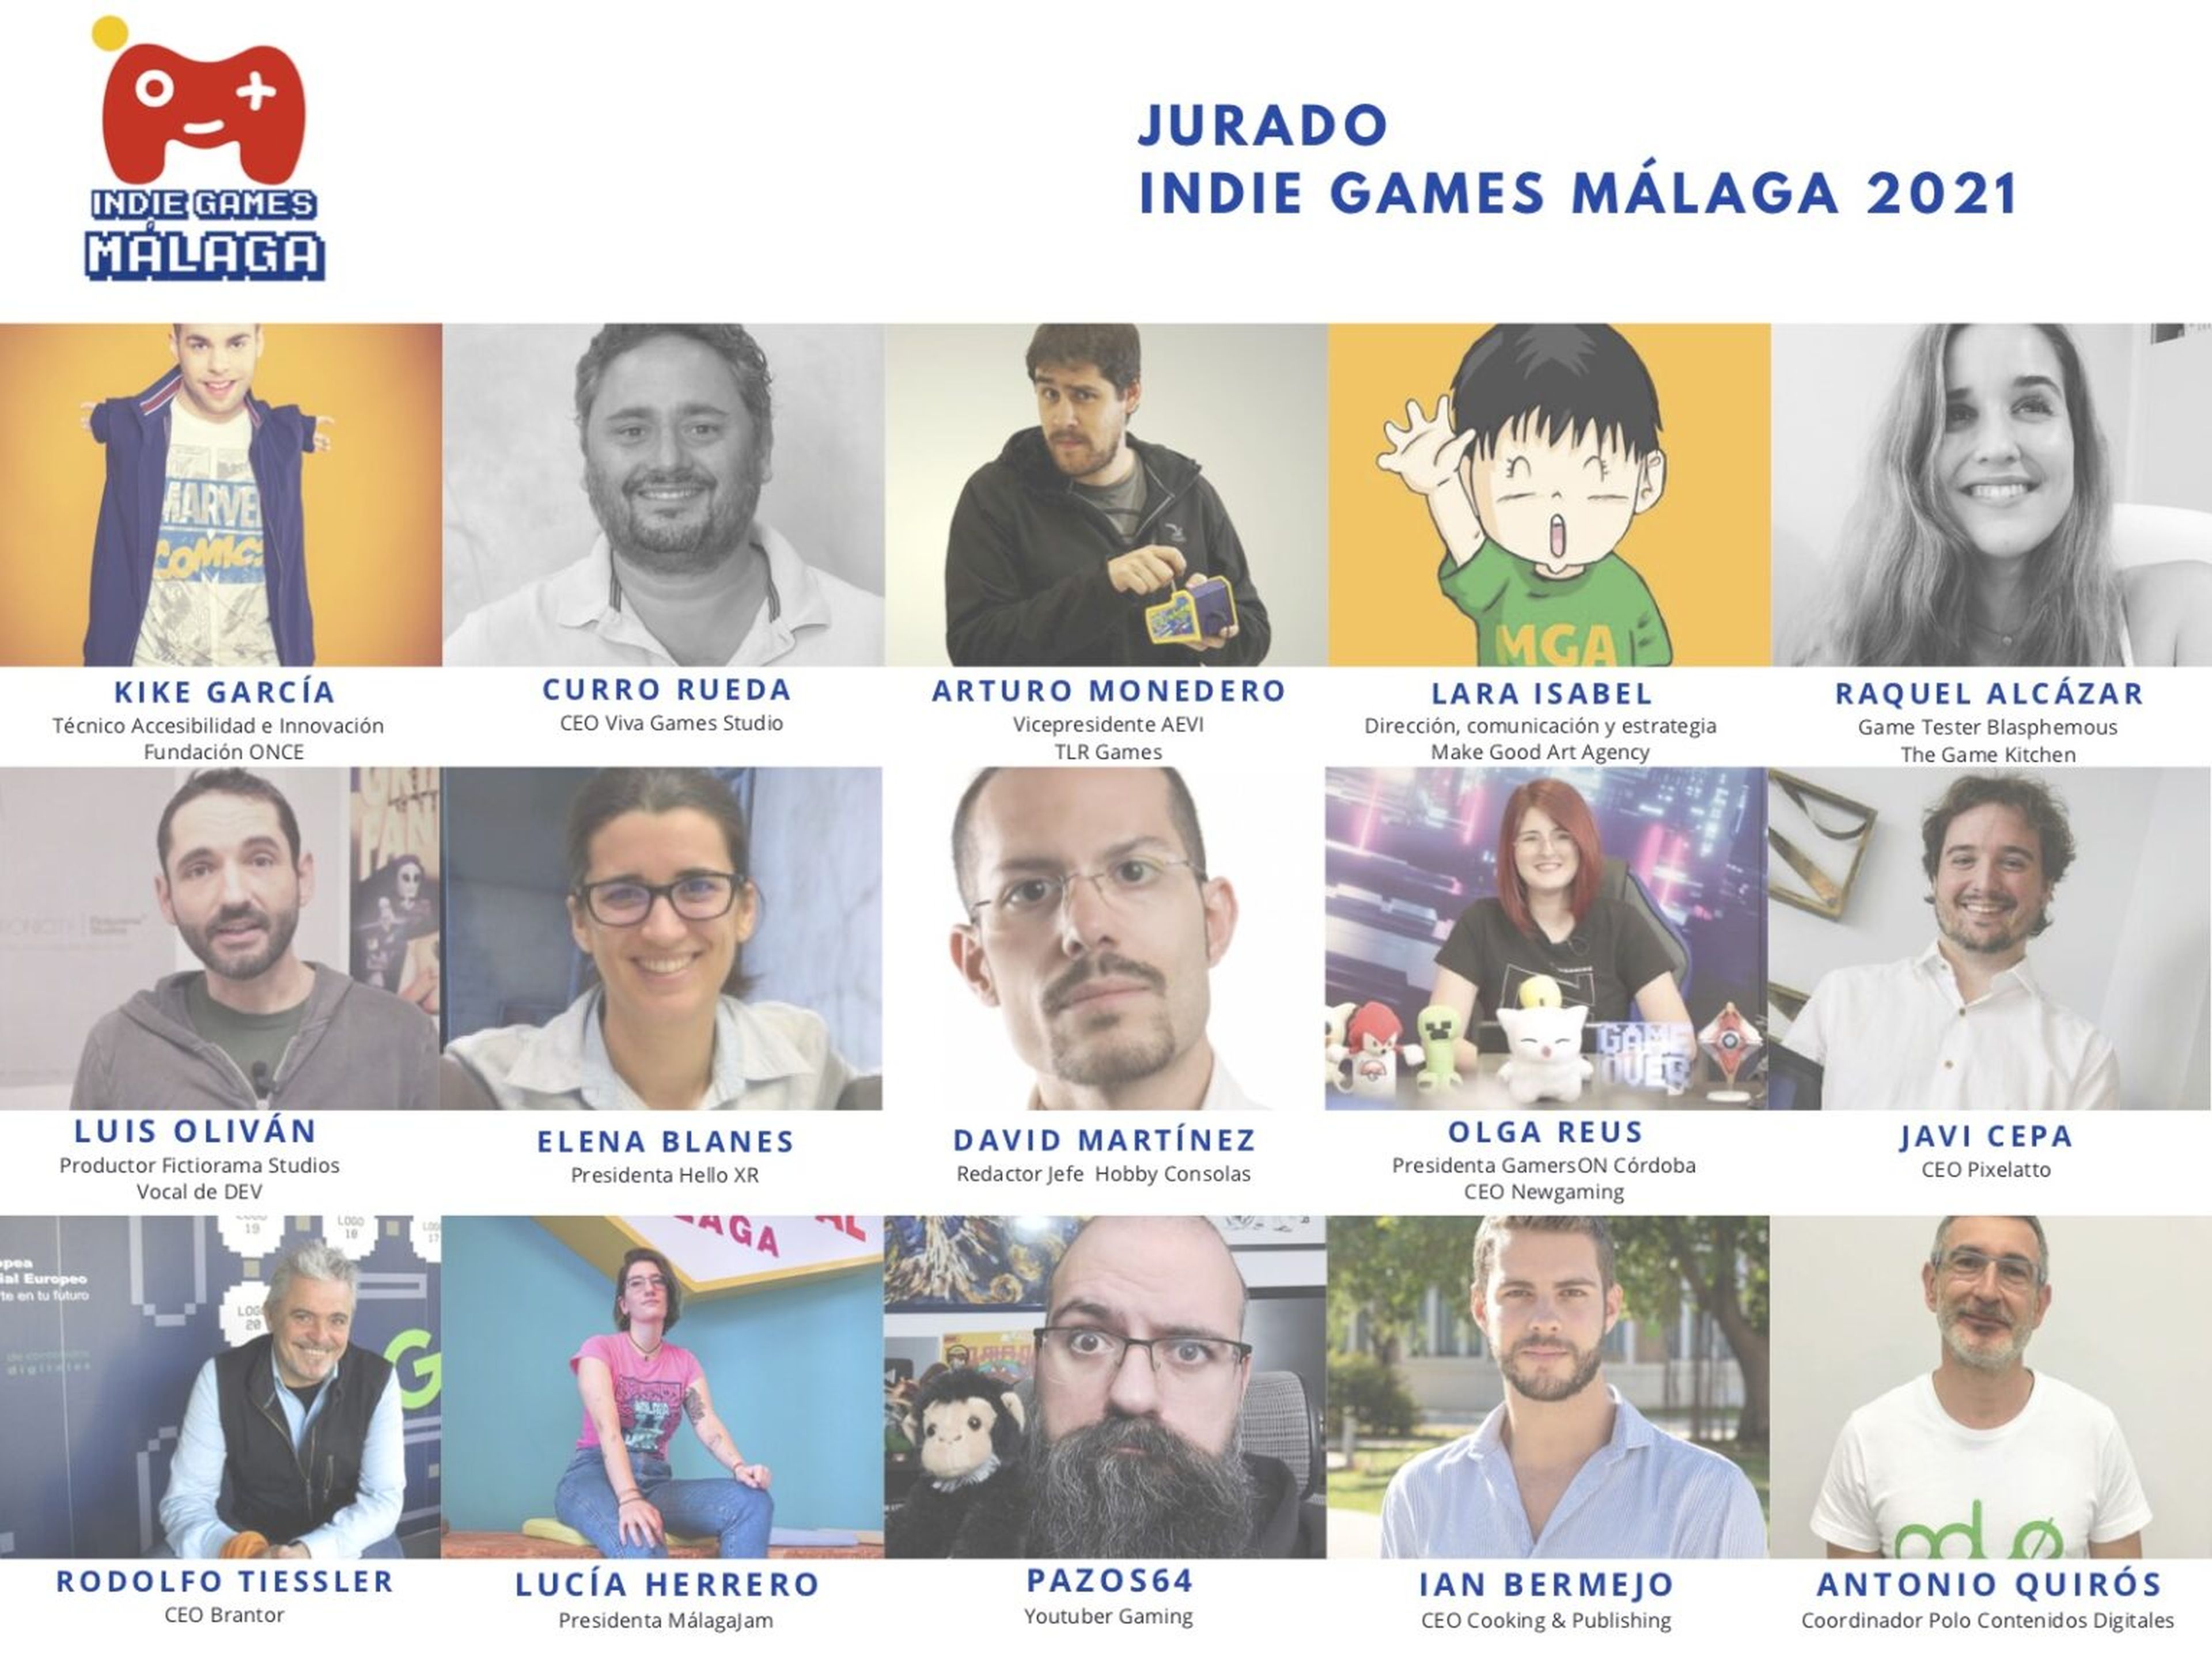 Jurado Indie Games Malaga